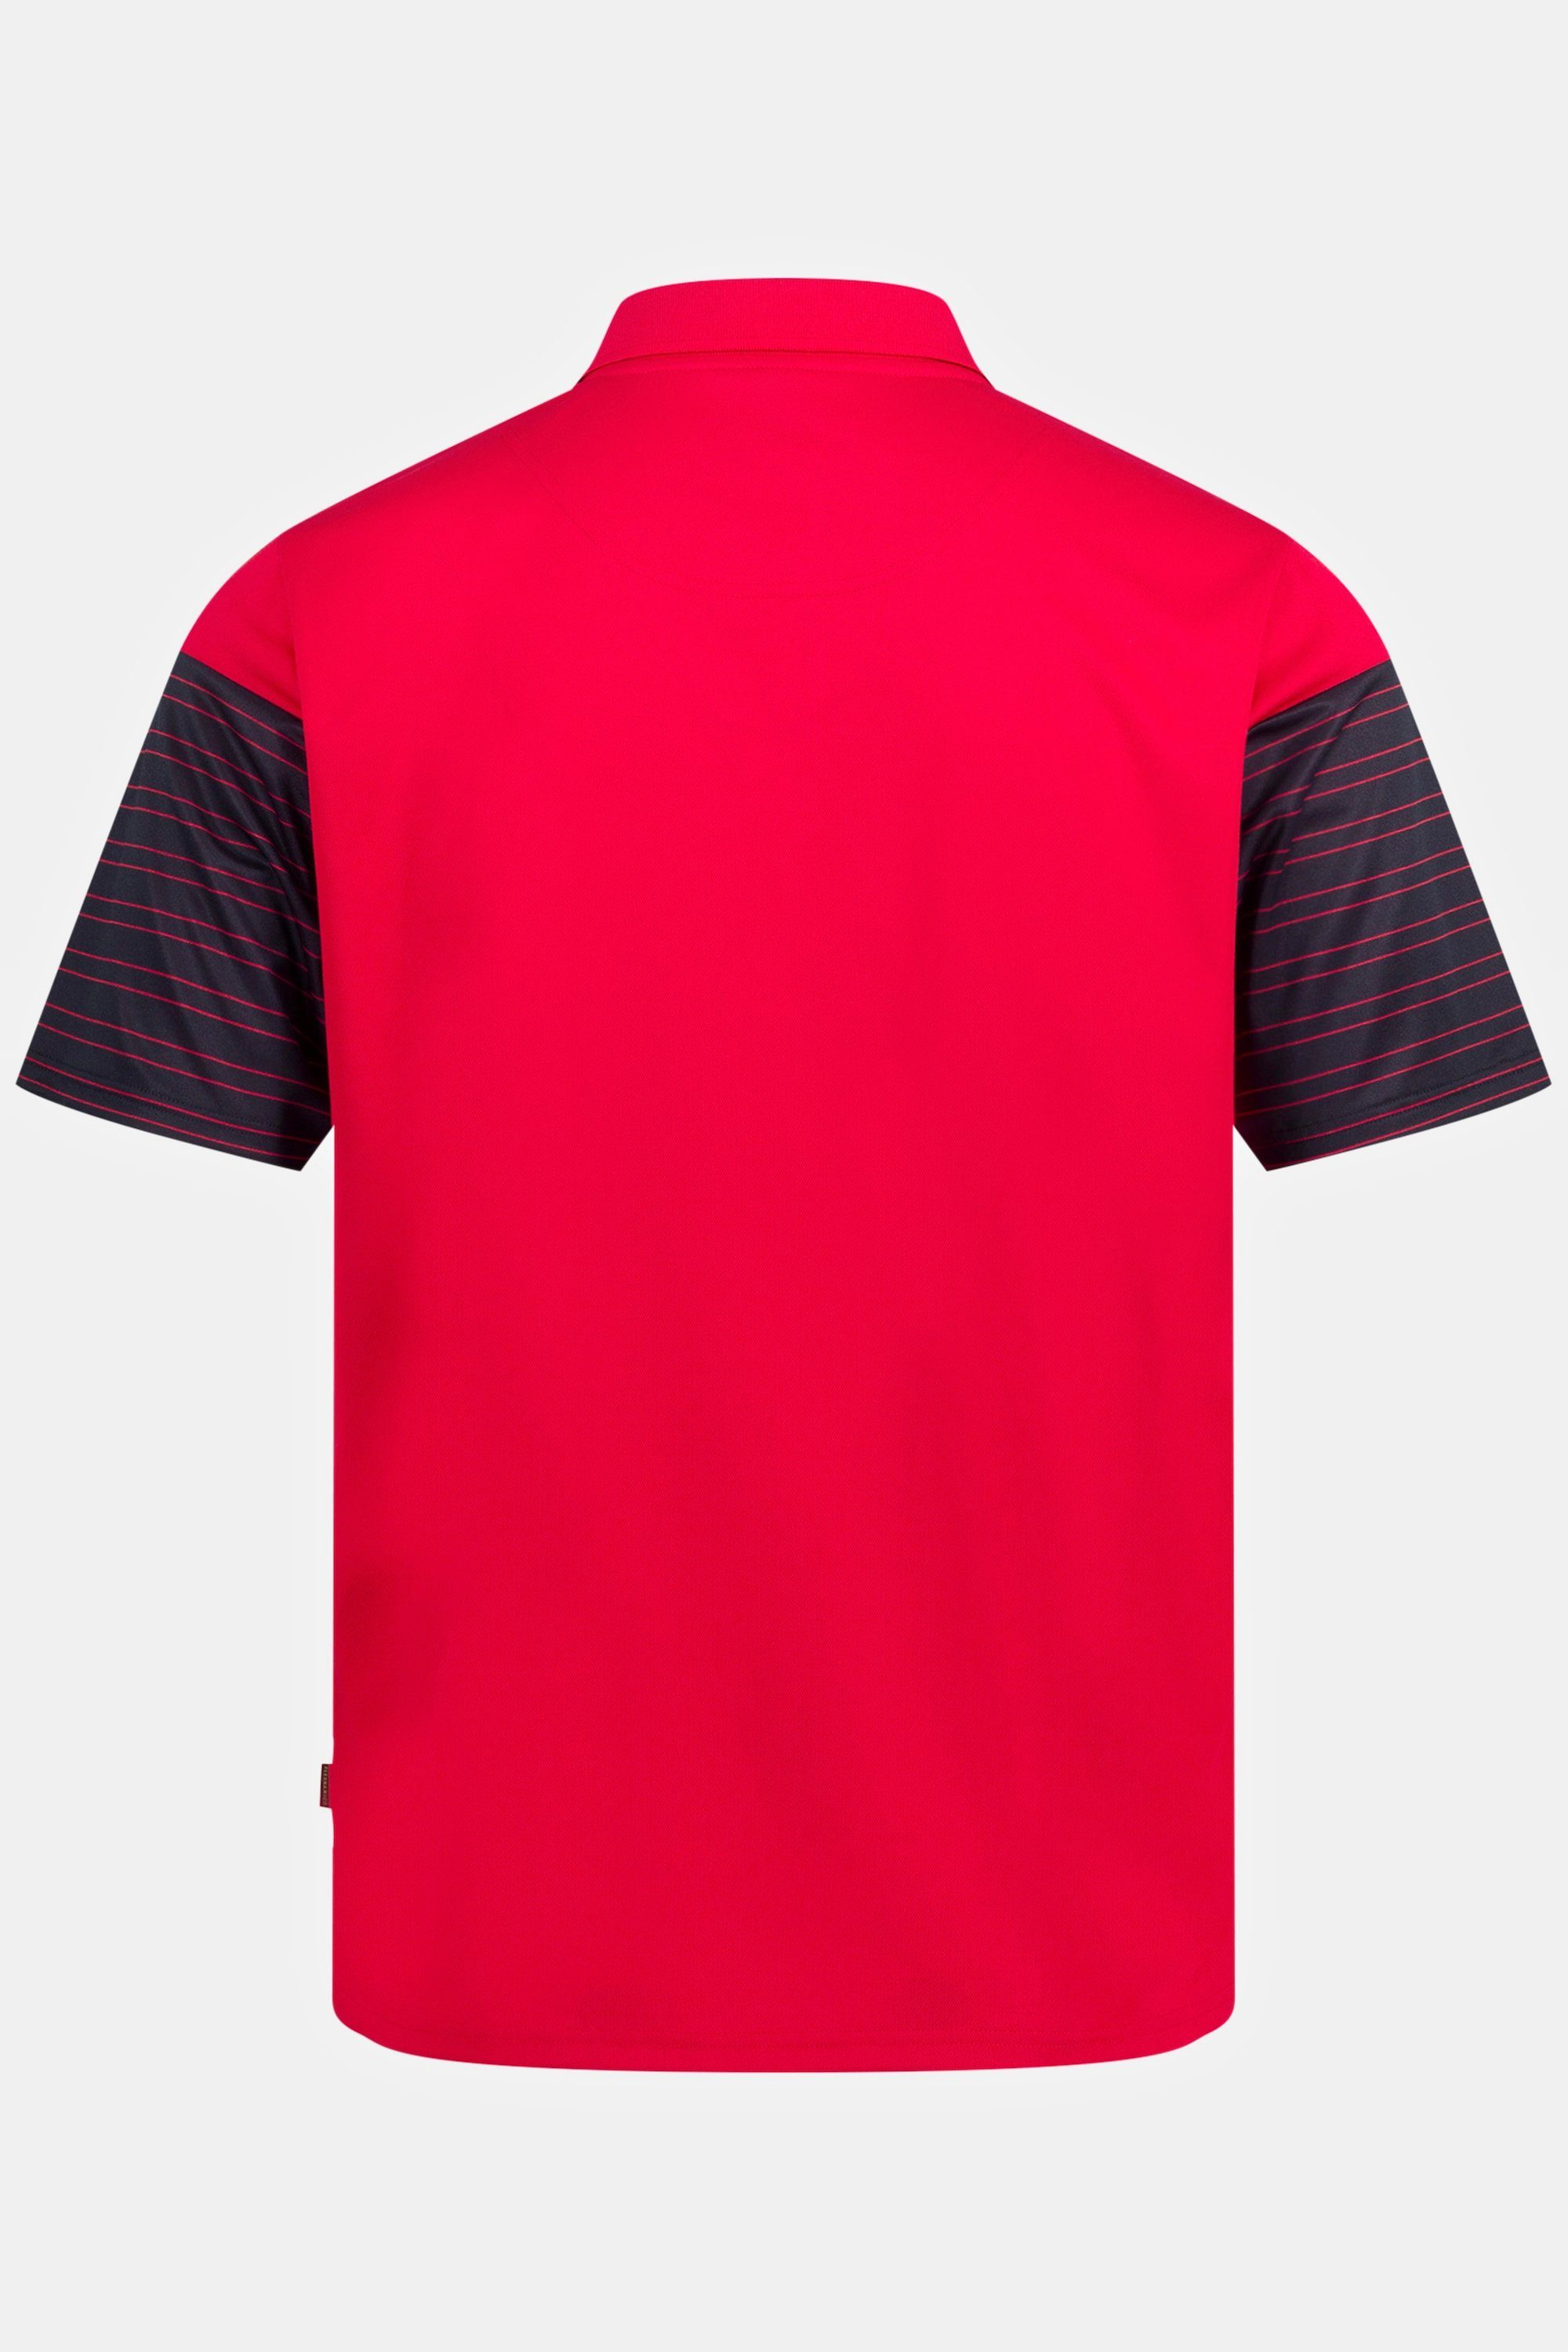 Tennis Funktions-Poloshirt QuickDry JP1880 Poloshirt Halbarm